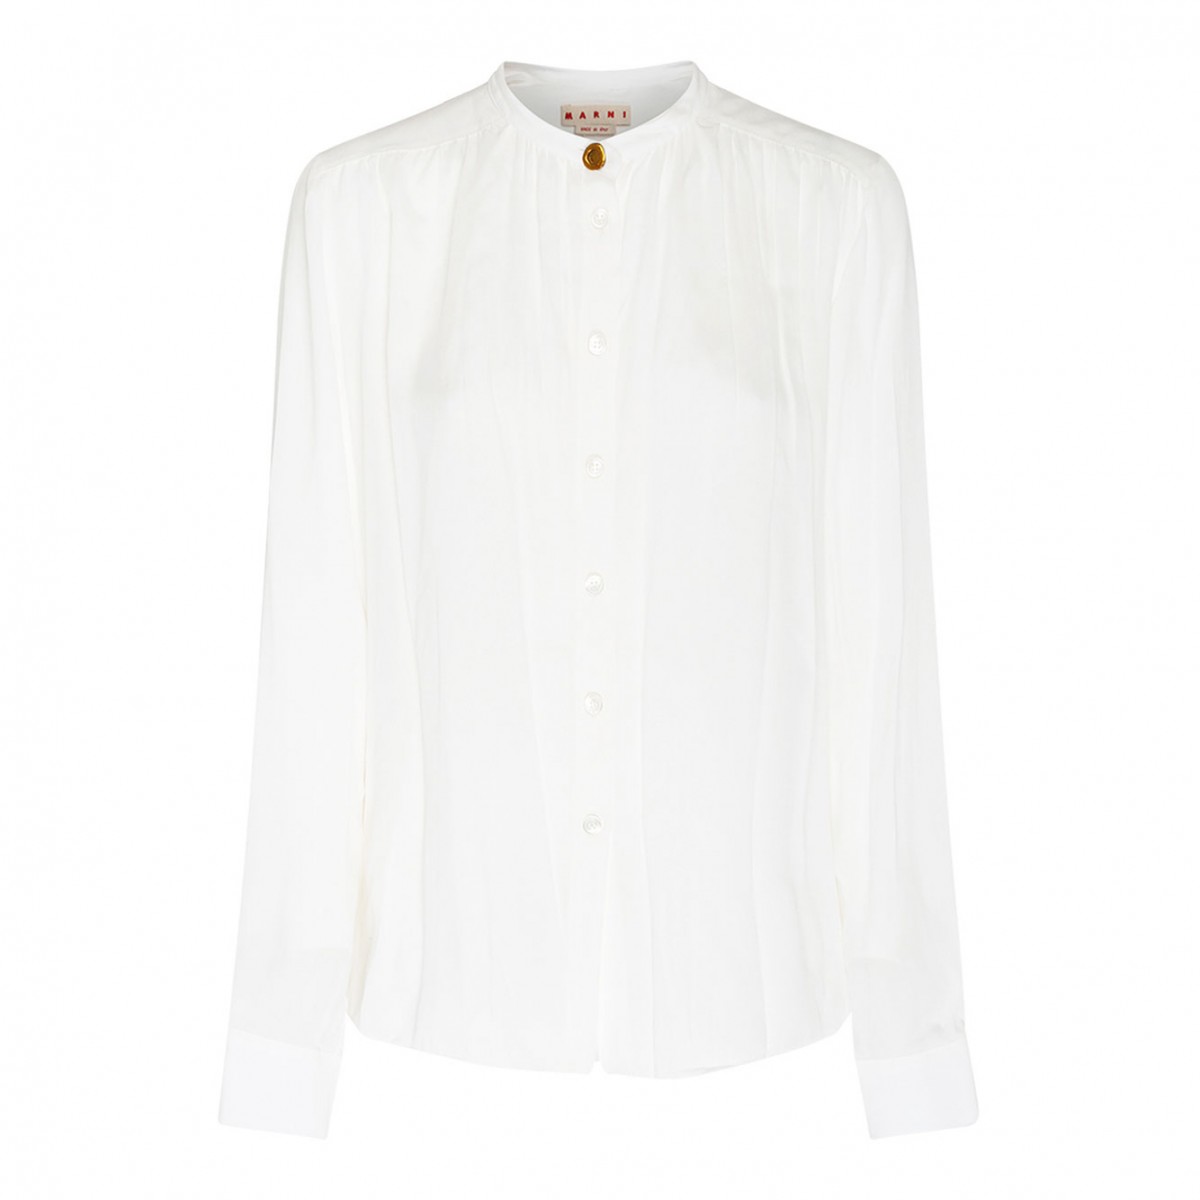 Marni White Silk Long Sleeved Shirt.